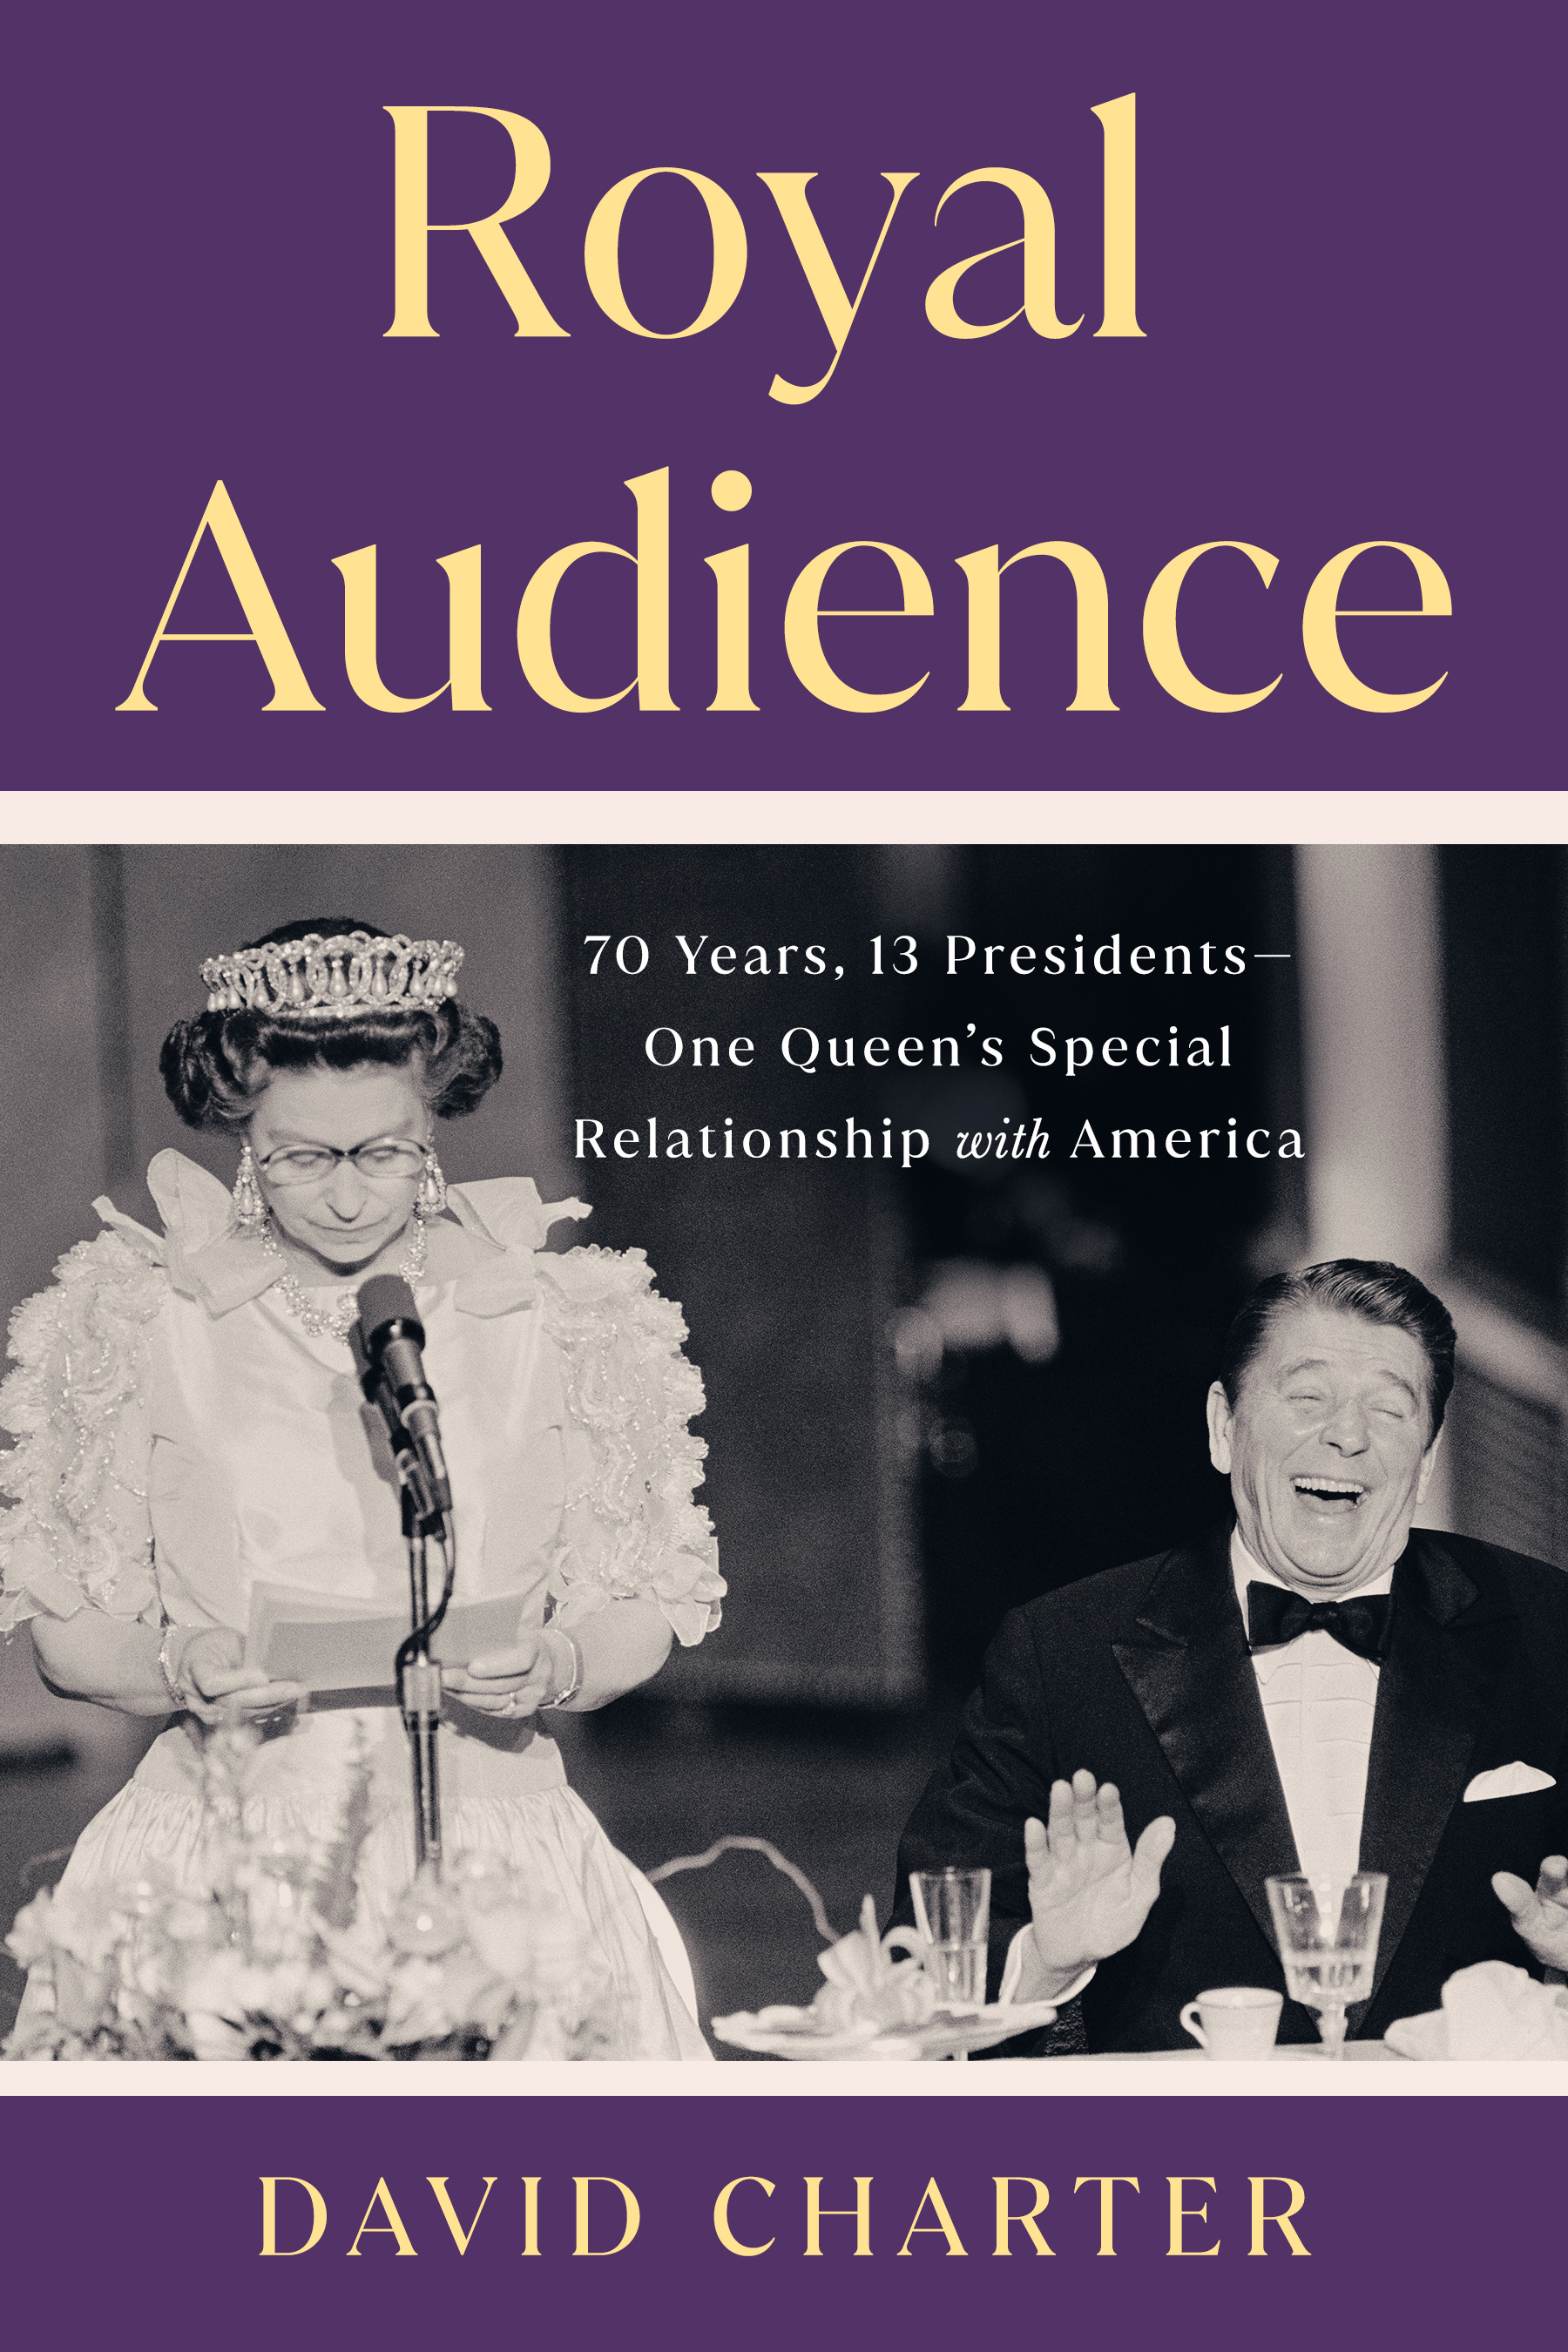 Royal Audience: 70 Years, 13 Presidents